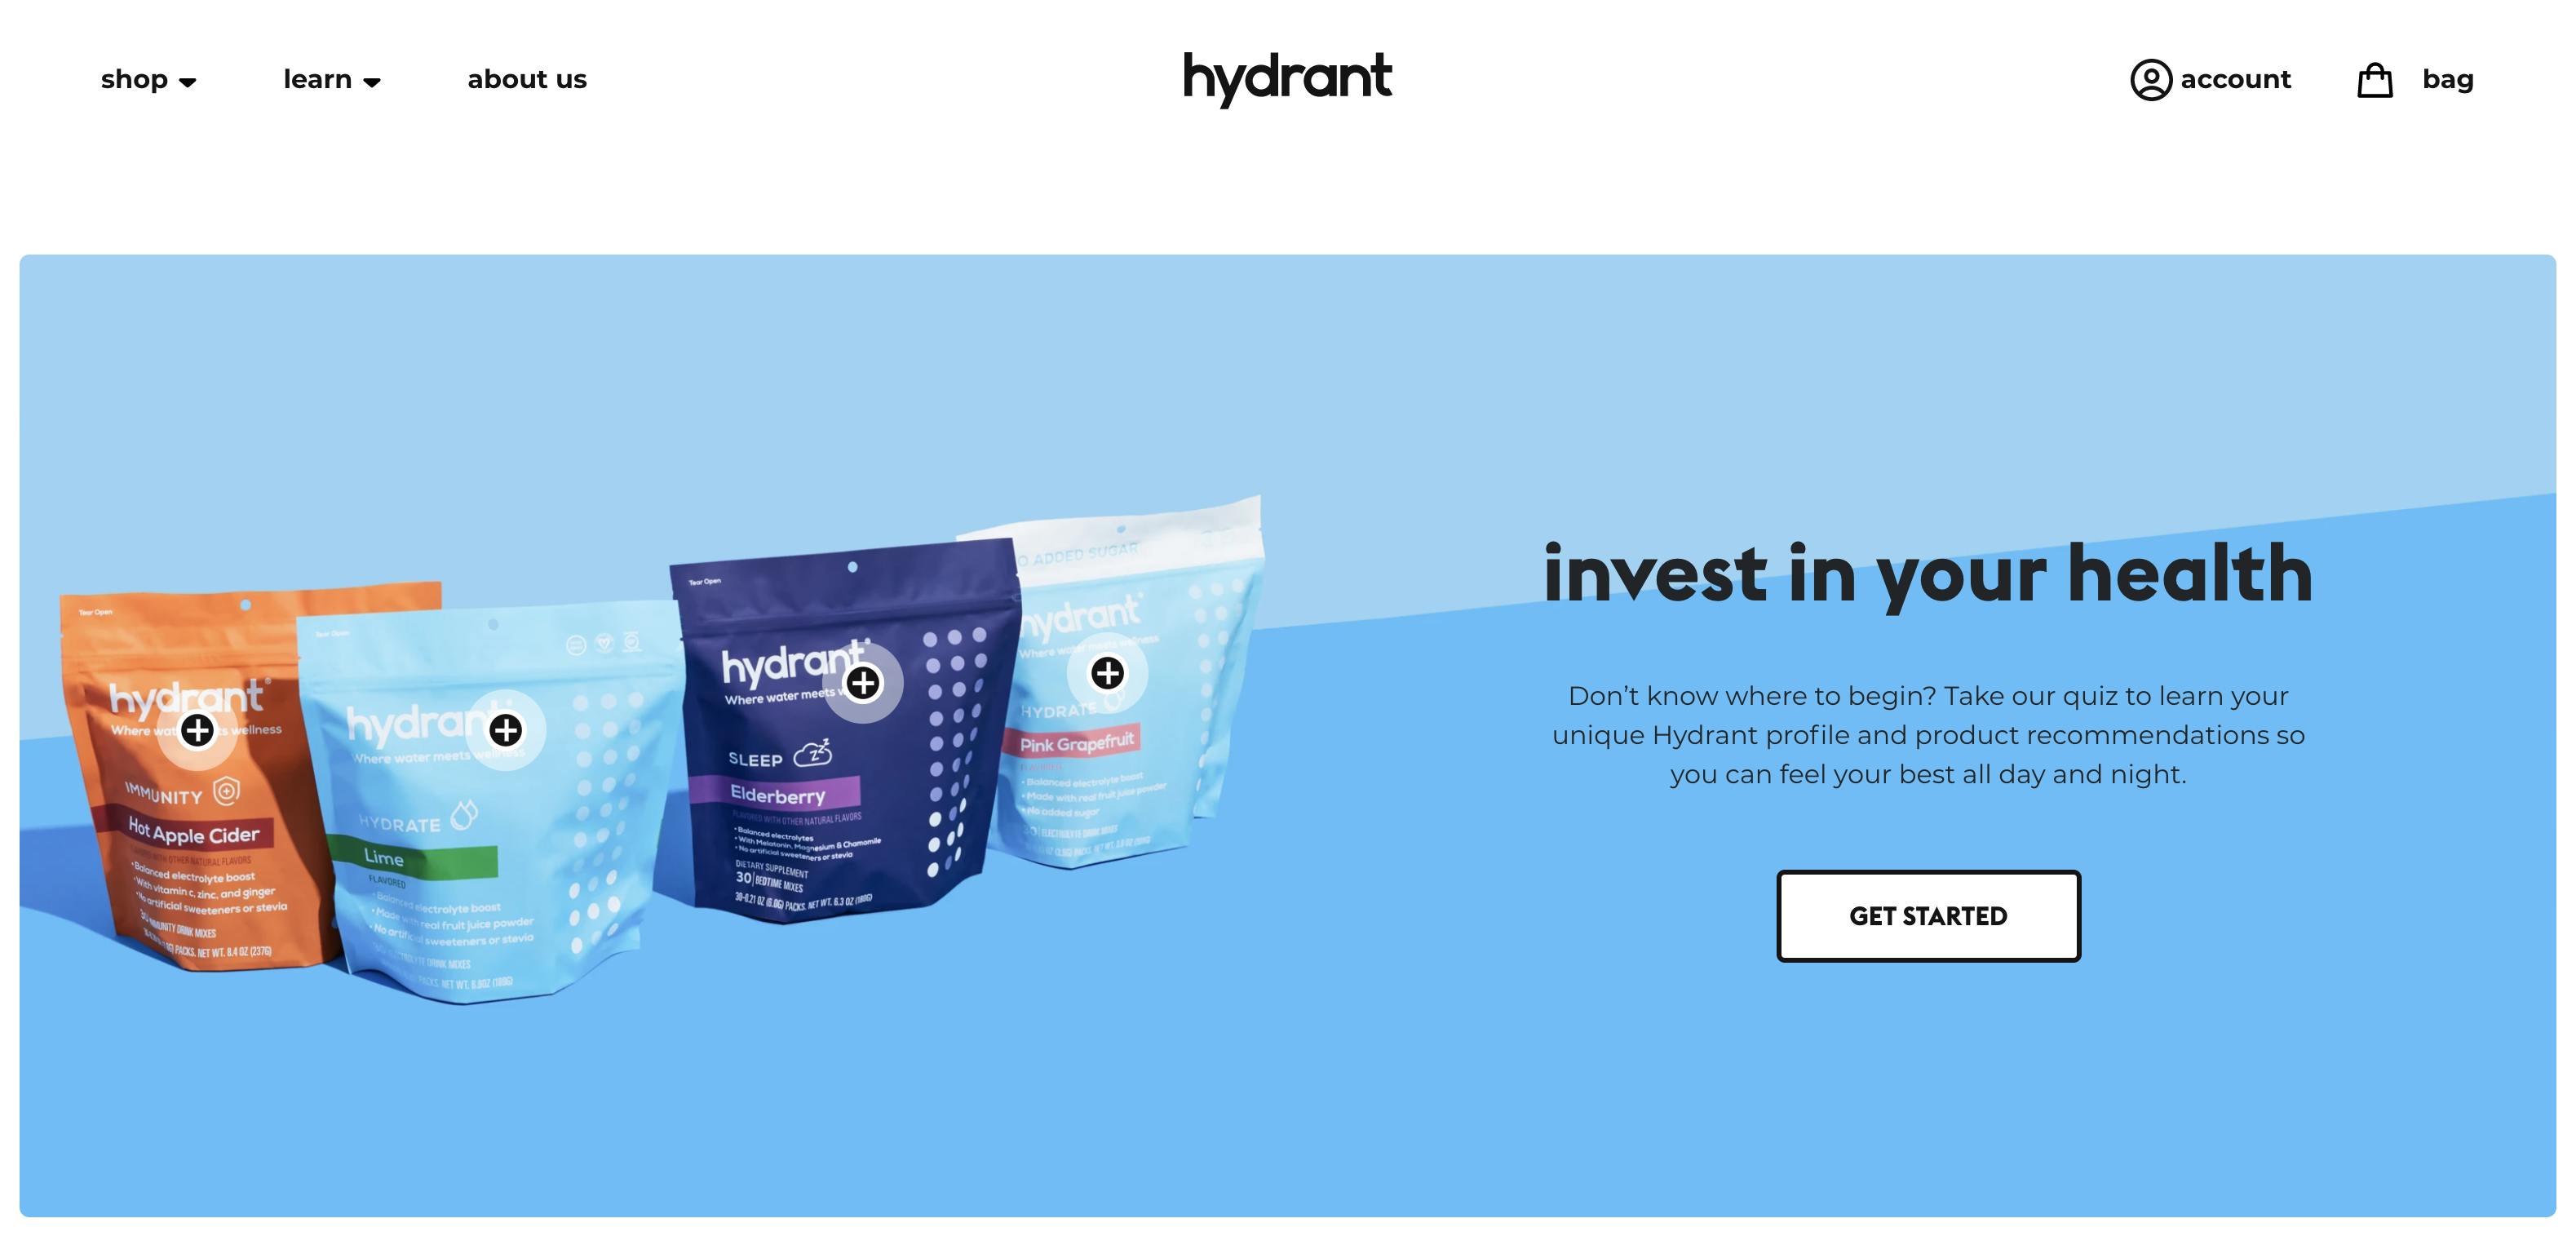 Hydrant packs